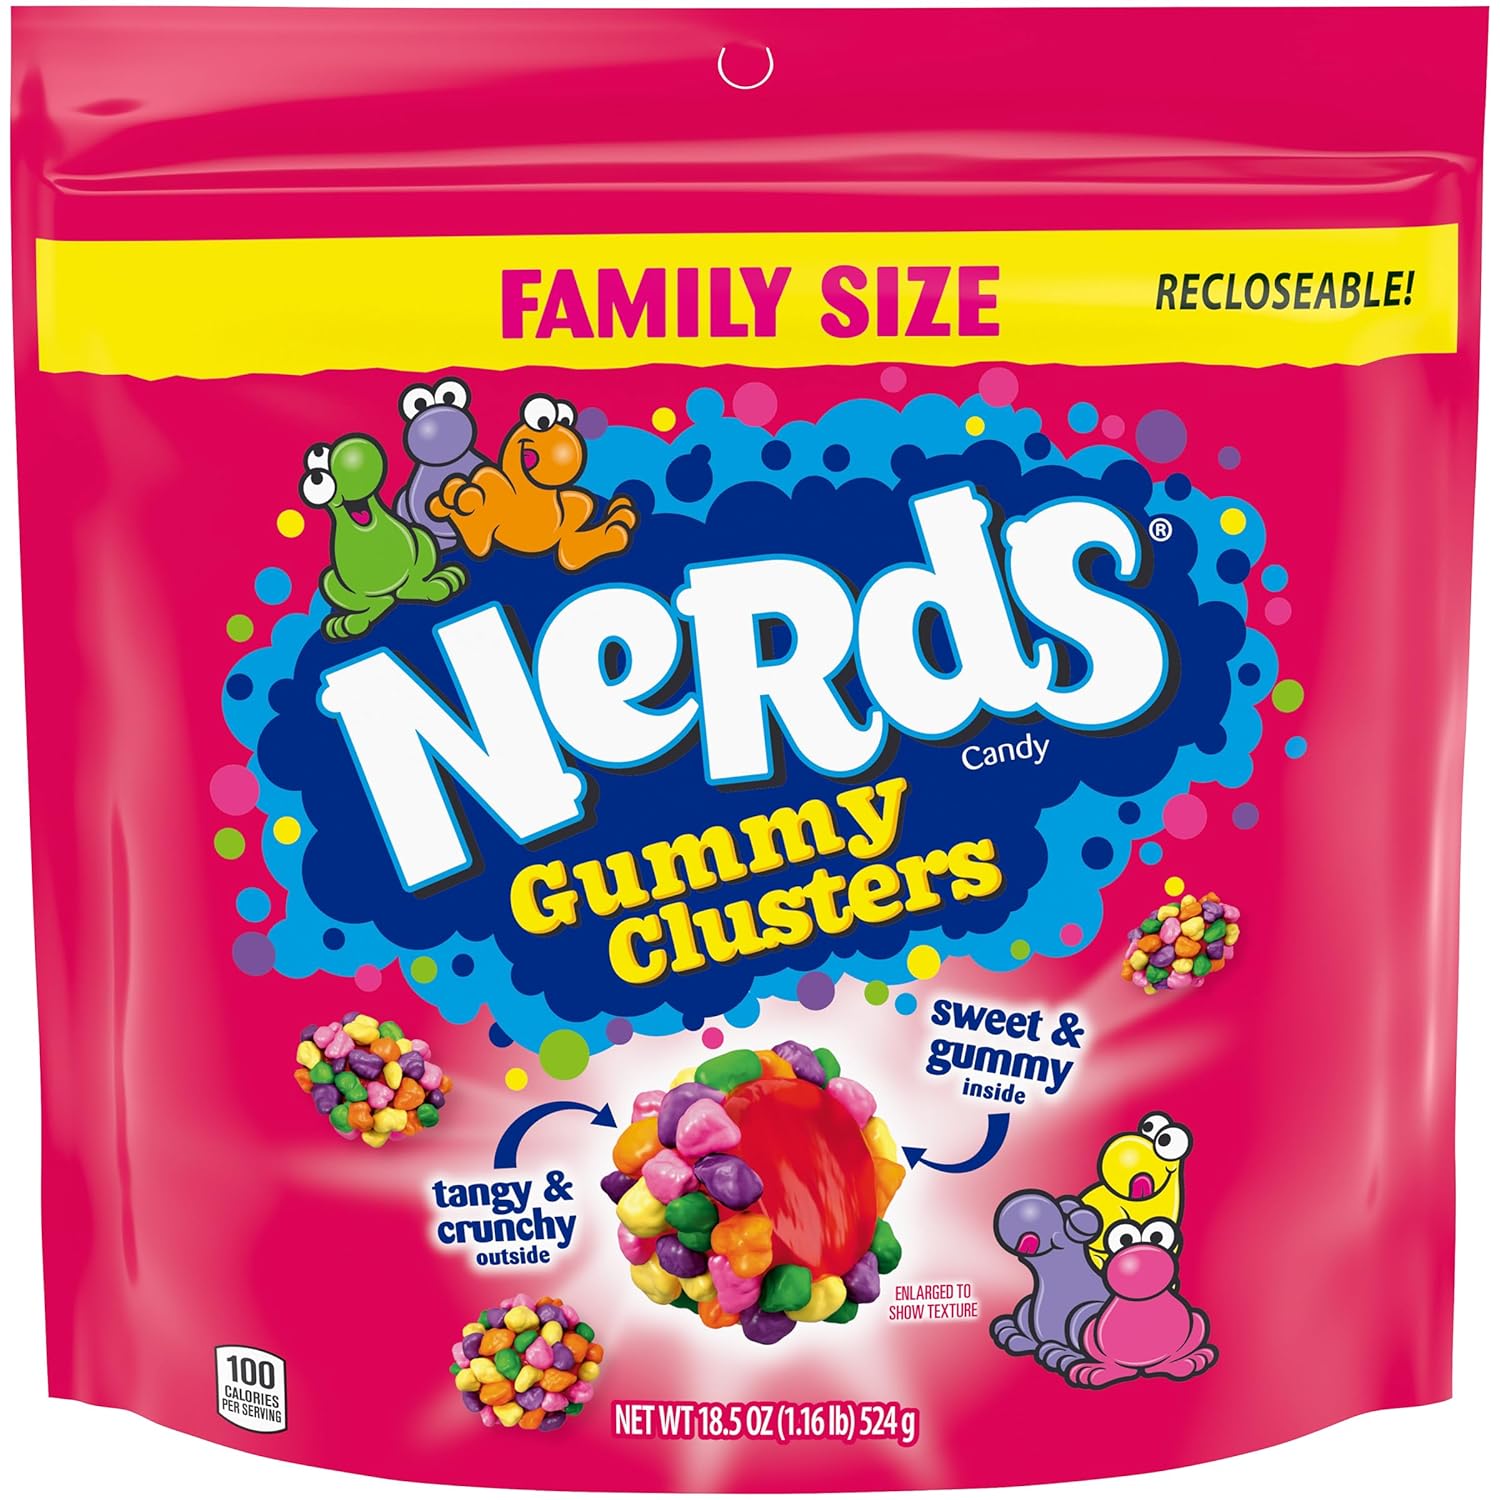 18.5-Oz Nerds Gummy Clusters Candy Family Size Bag (Rainbow) $3.71 w/ S&S + Free S&H w/ Prime